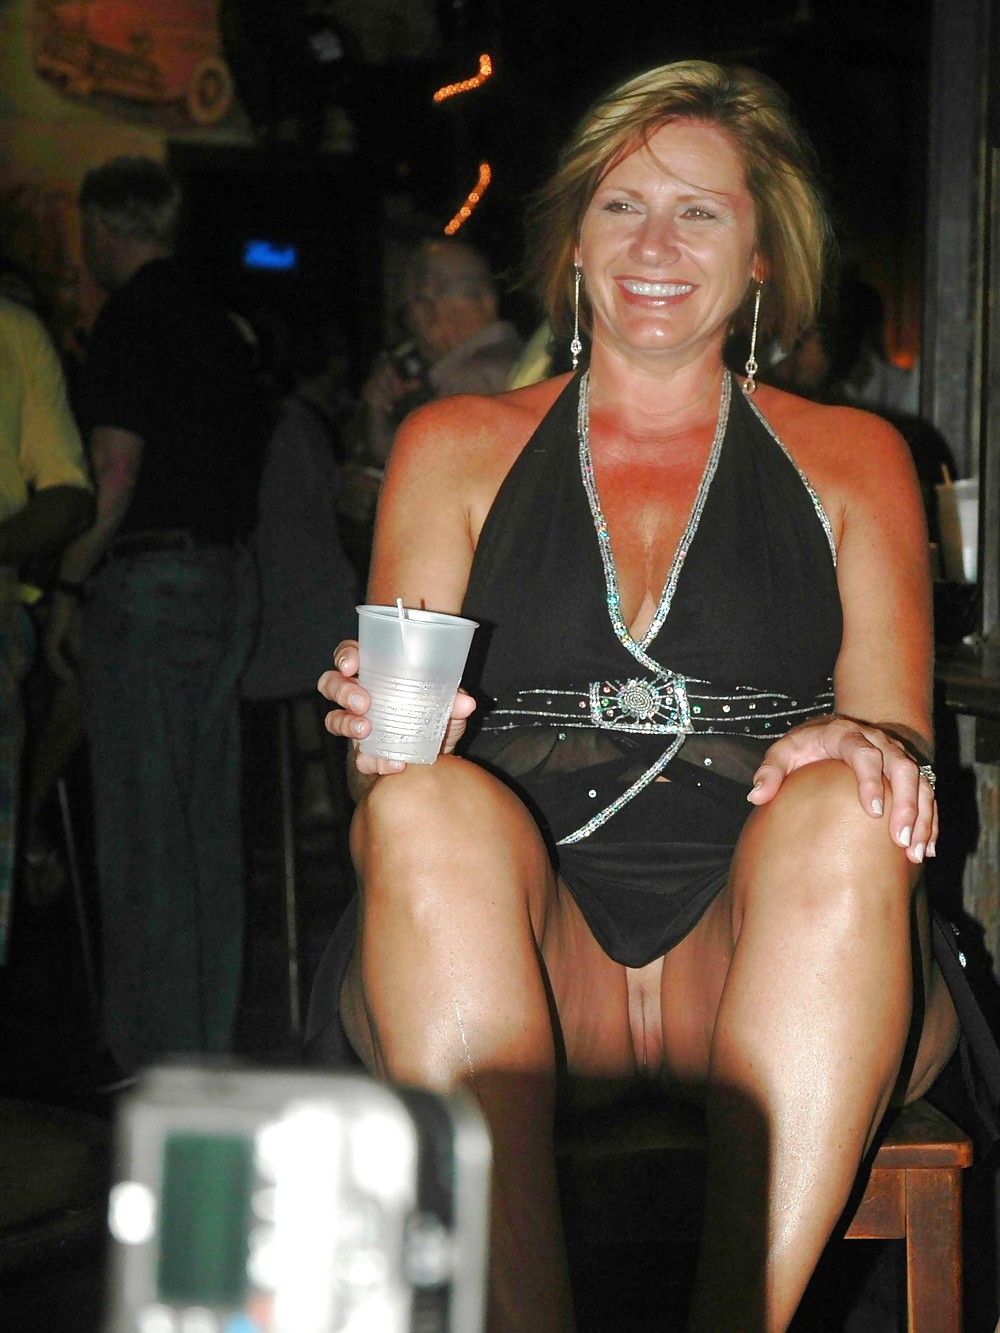 Upskirt No Panties #rec Amateur showing pussy PublicNudity 2 #6514688